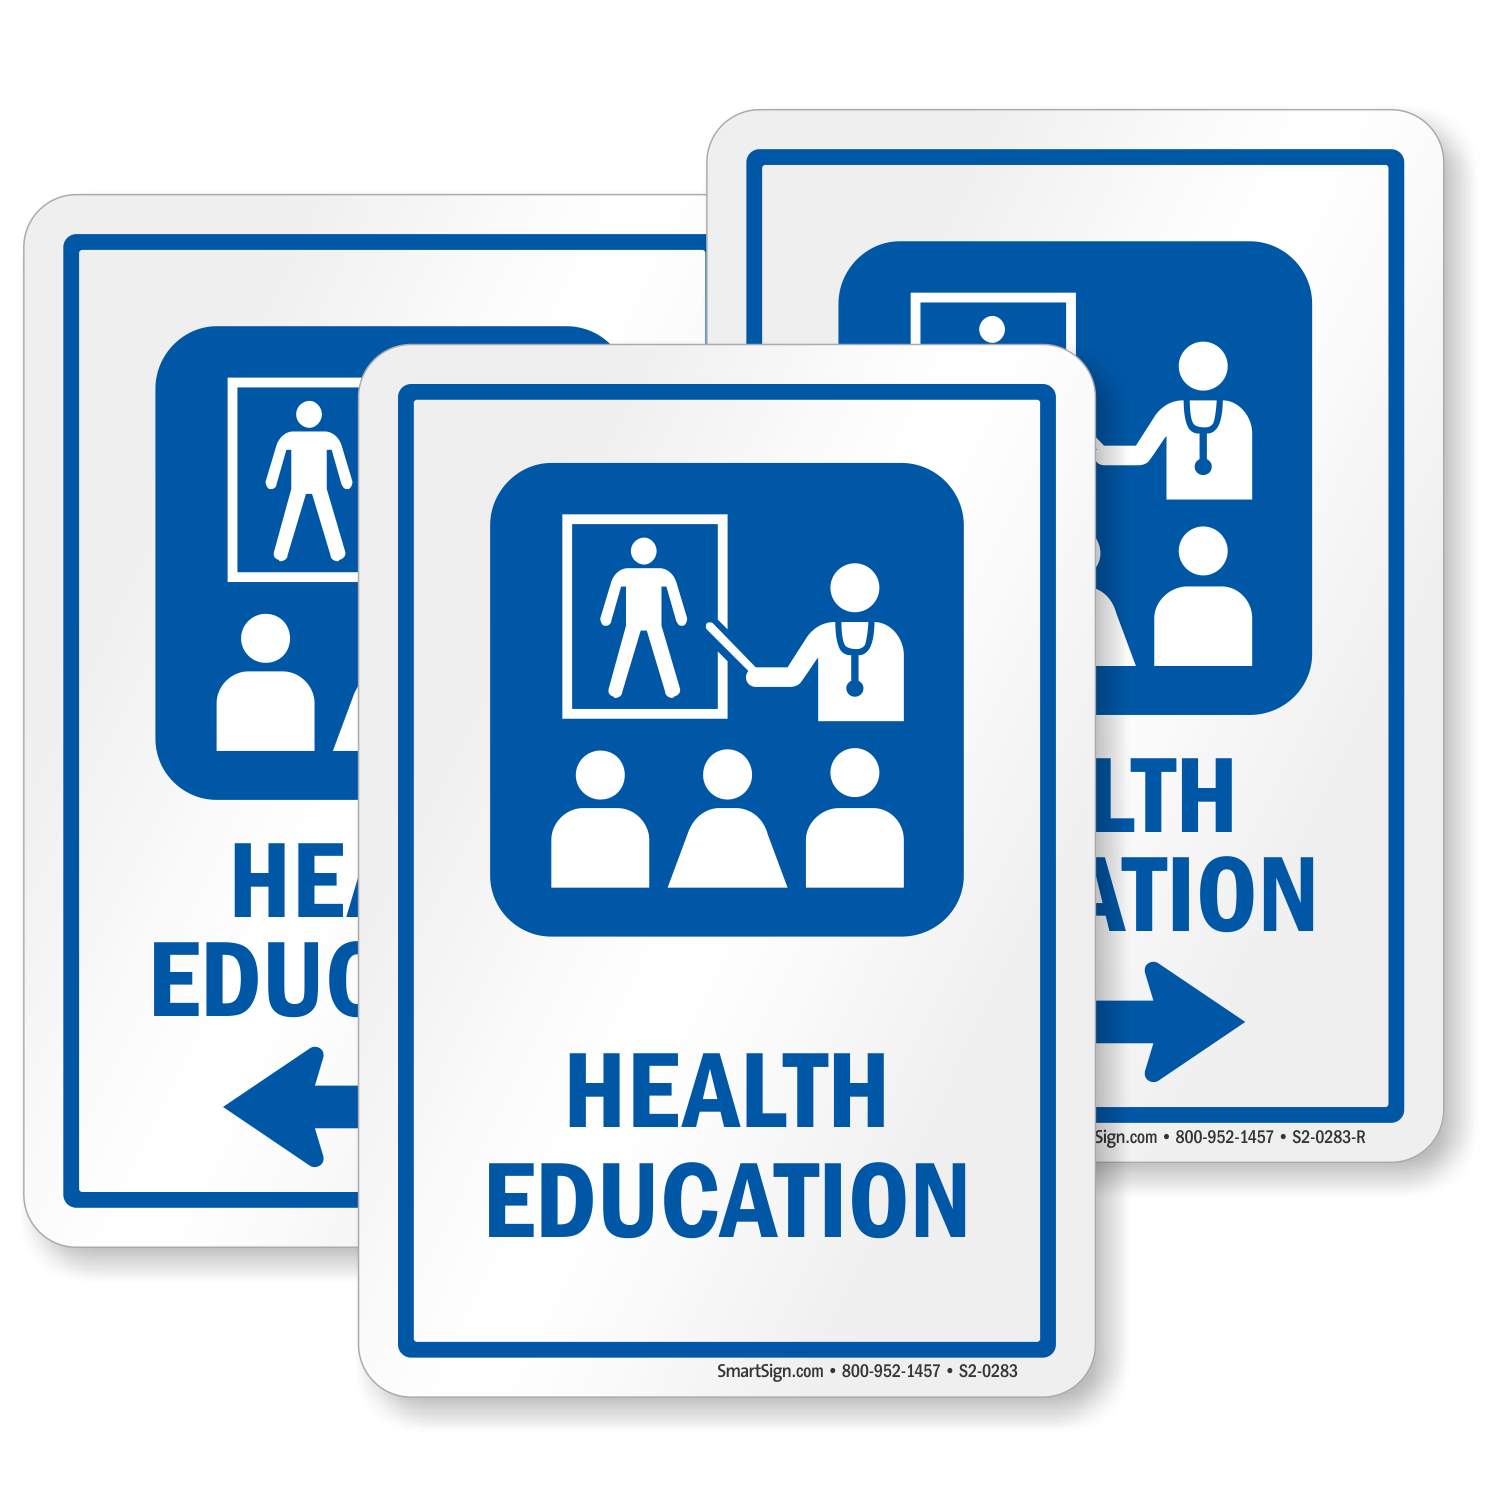 Health Education Hospital Sign, Health Educator Symbol, SKU: S2-0283